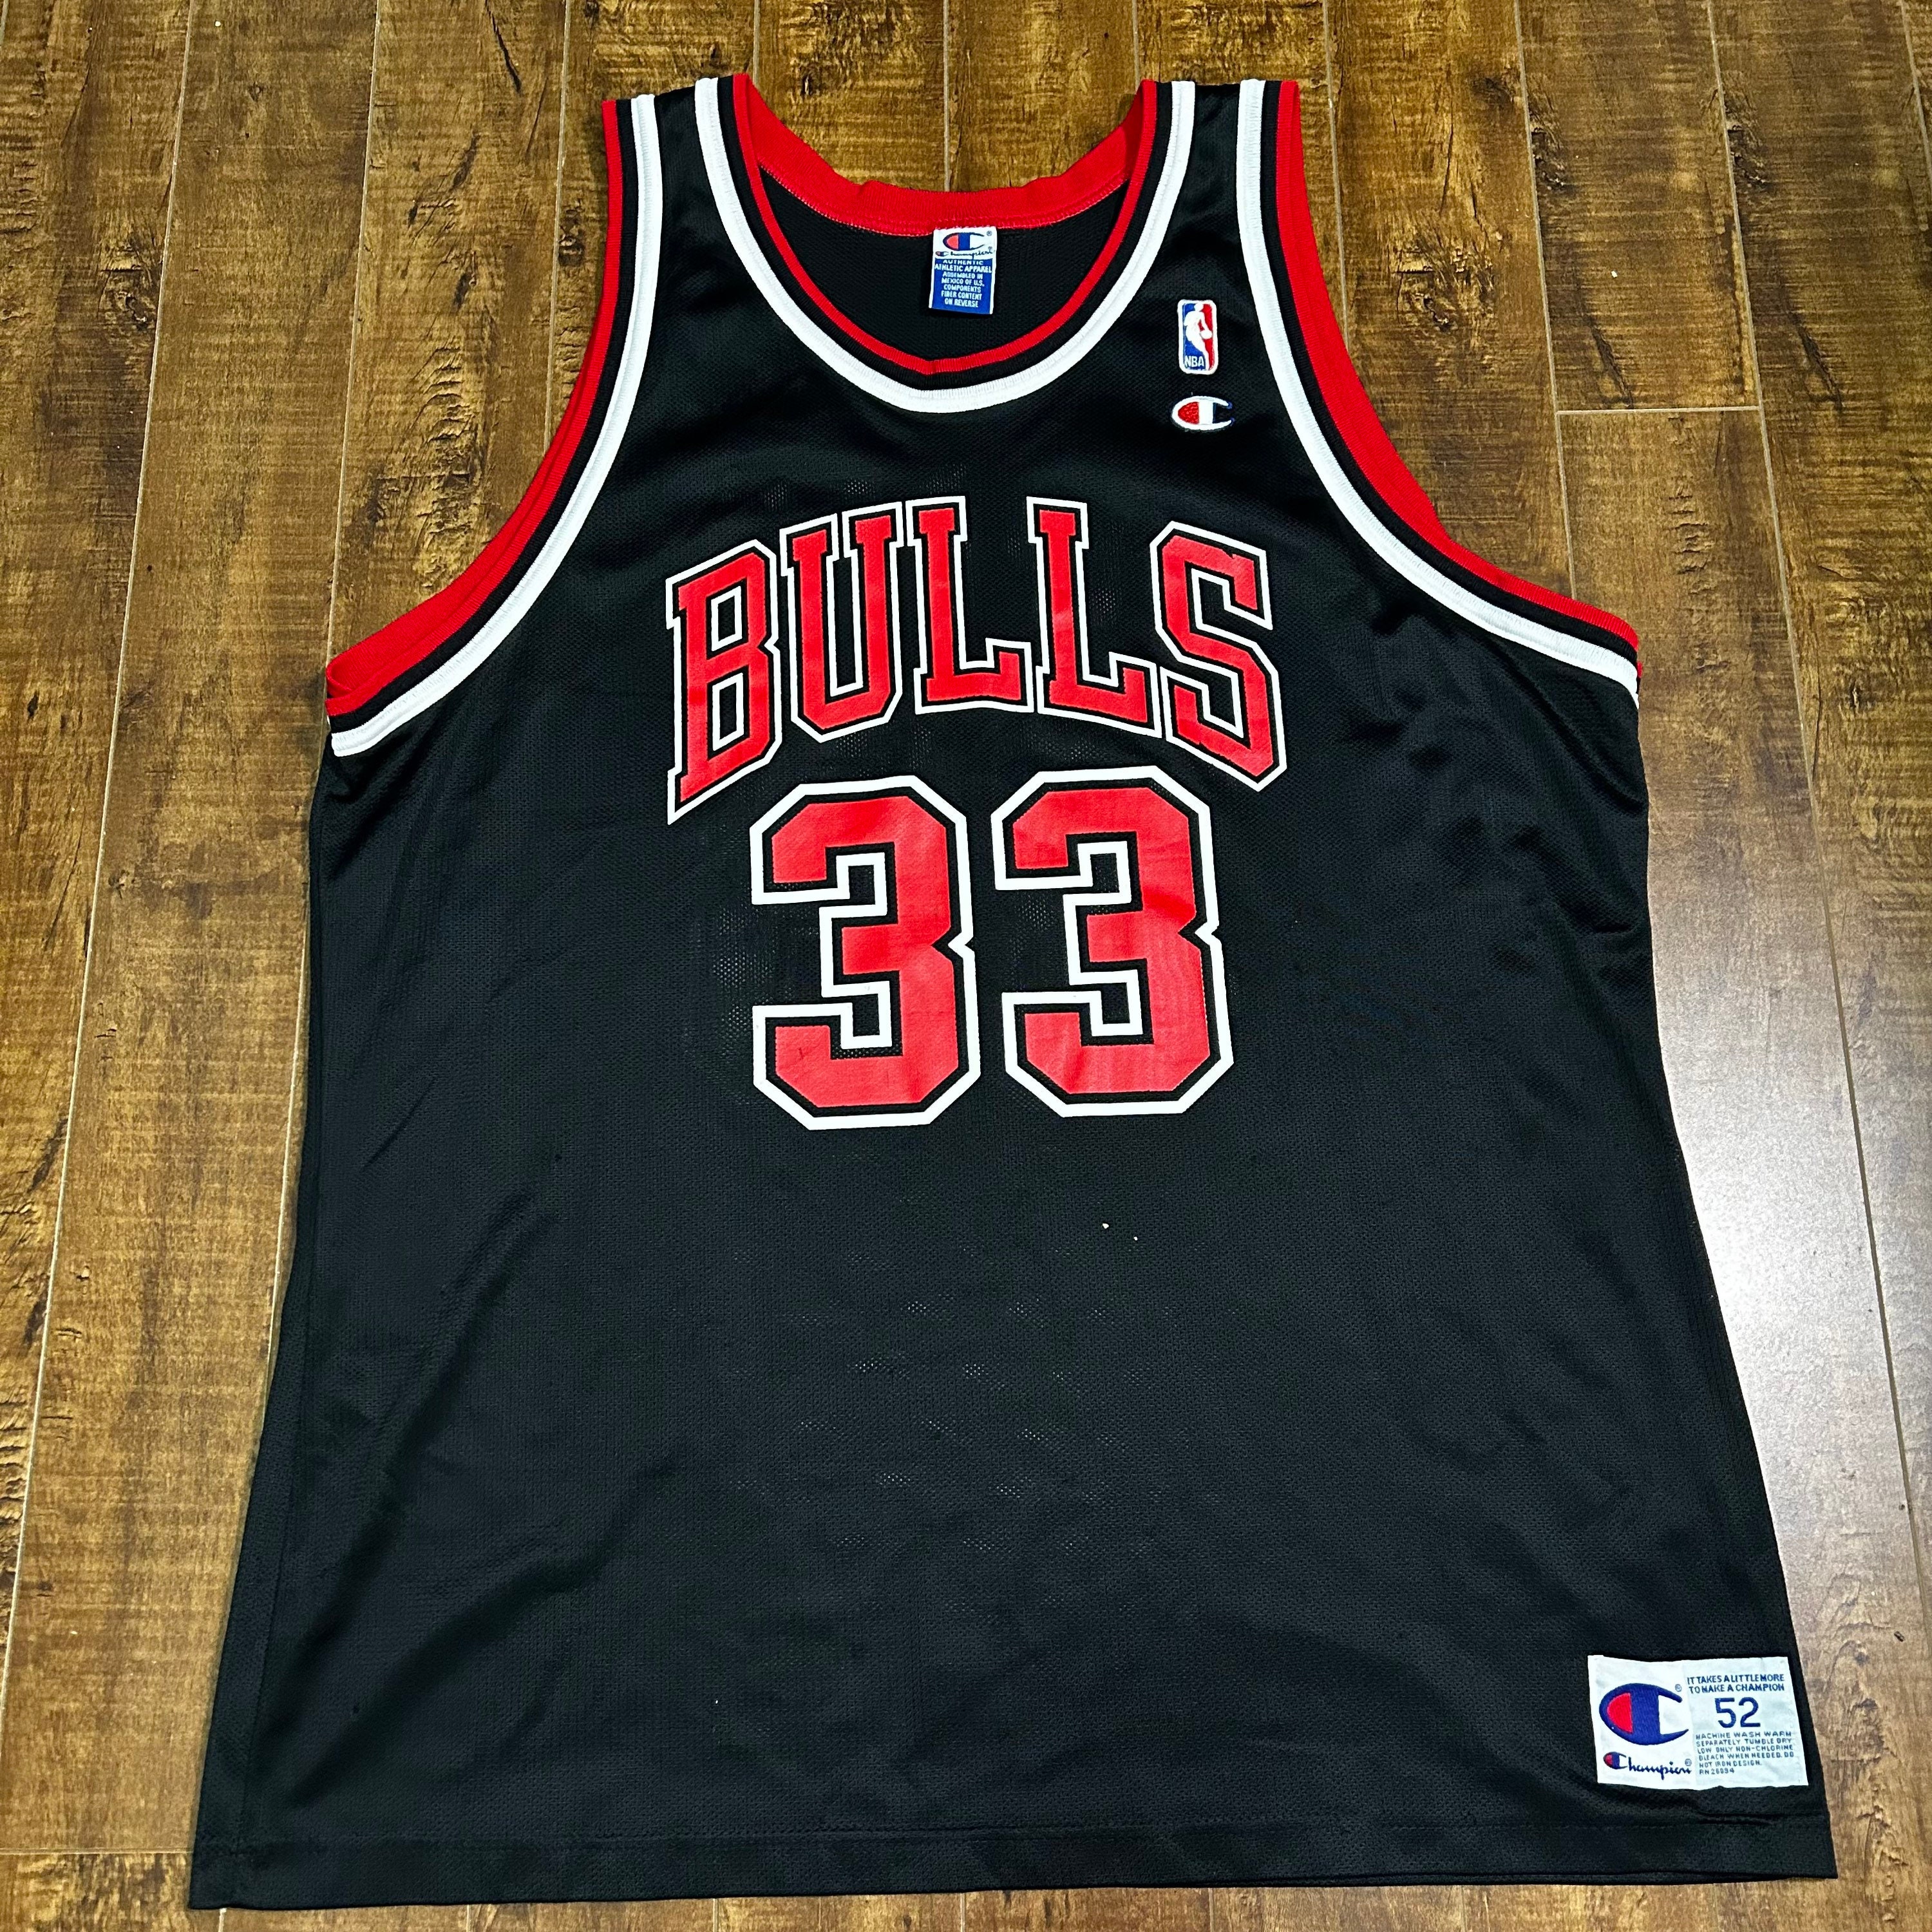 Size 40. VTG 91/92 NBA Champion Jordan Jersey Chicago Bulls -  Hong Kong